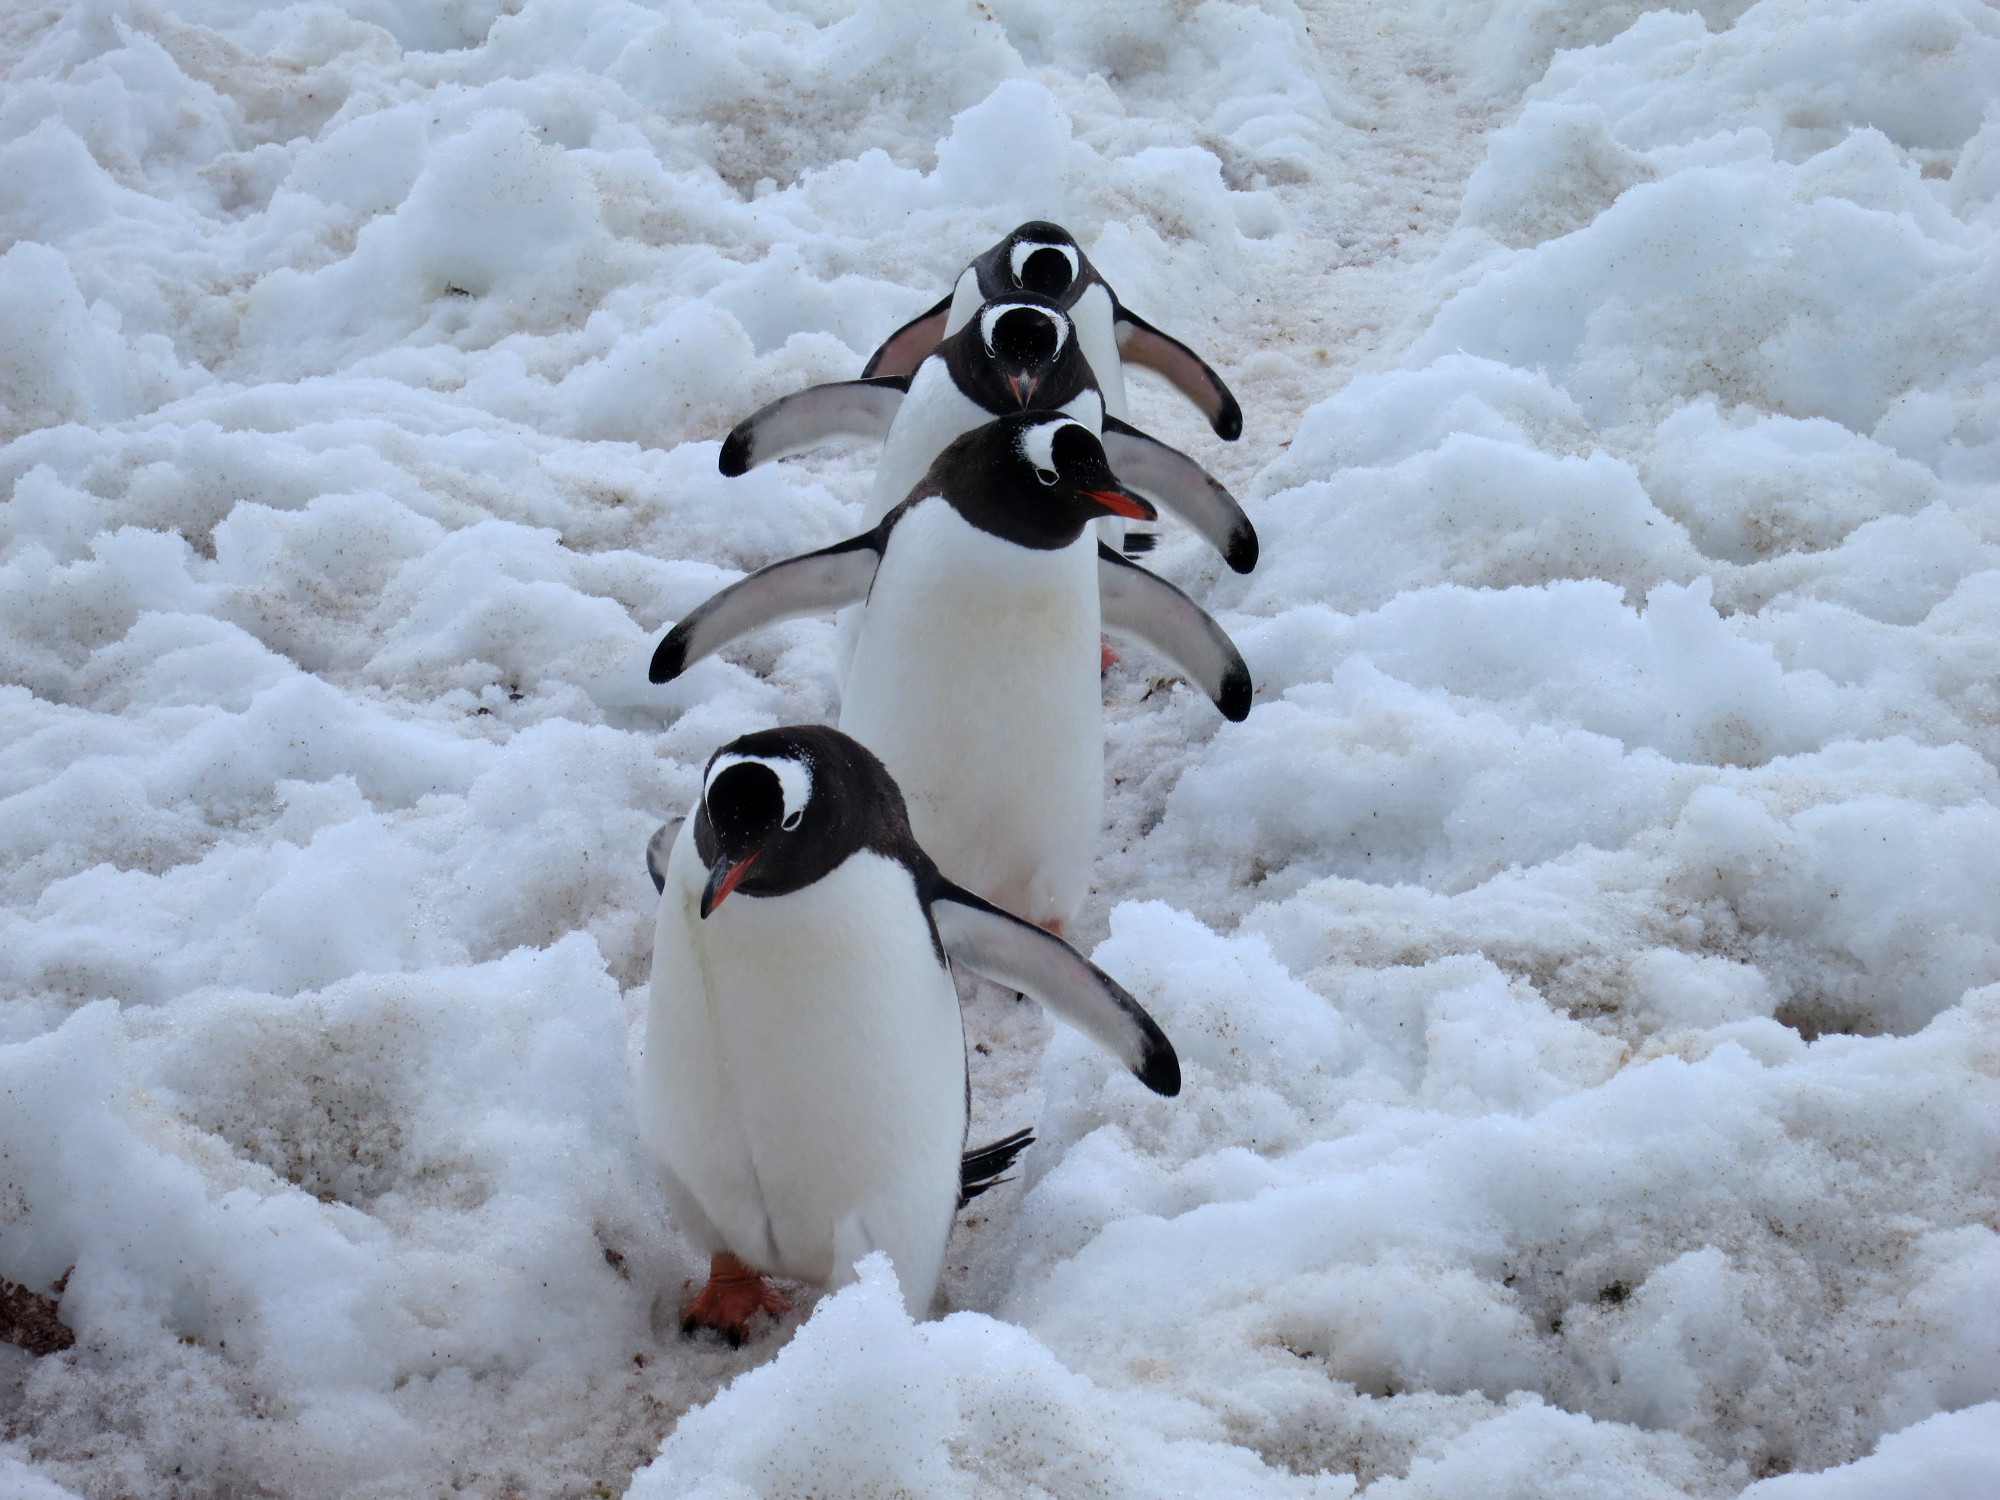 Penguin pictures